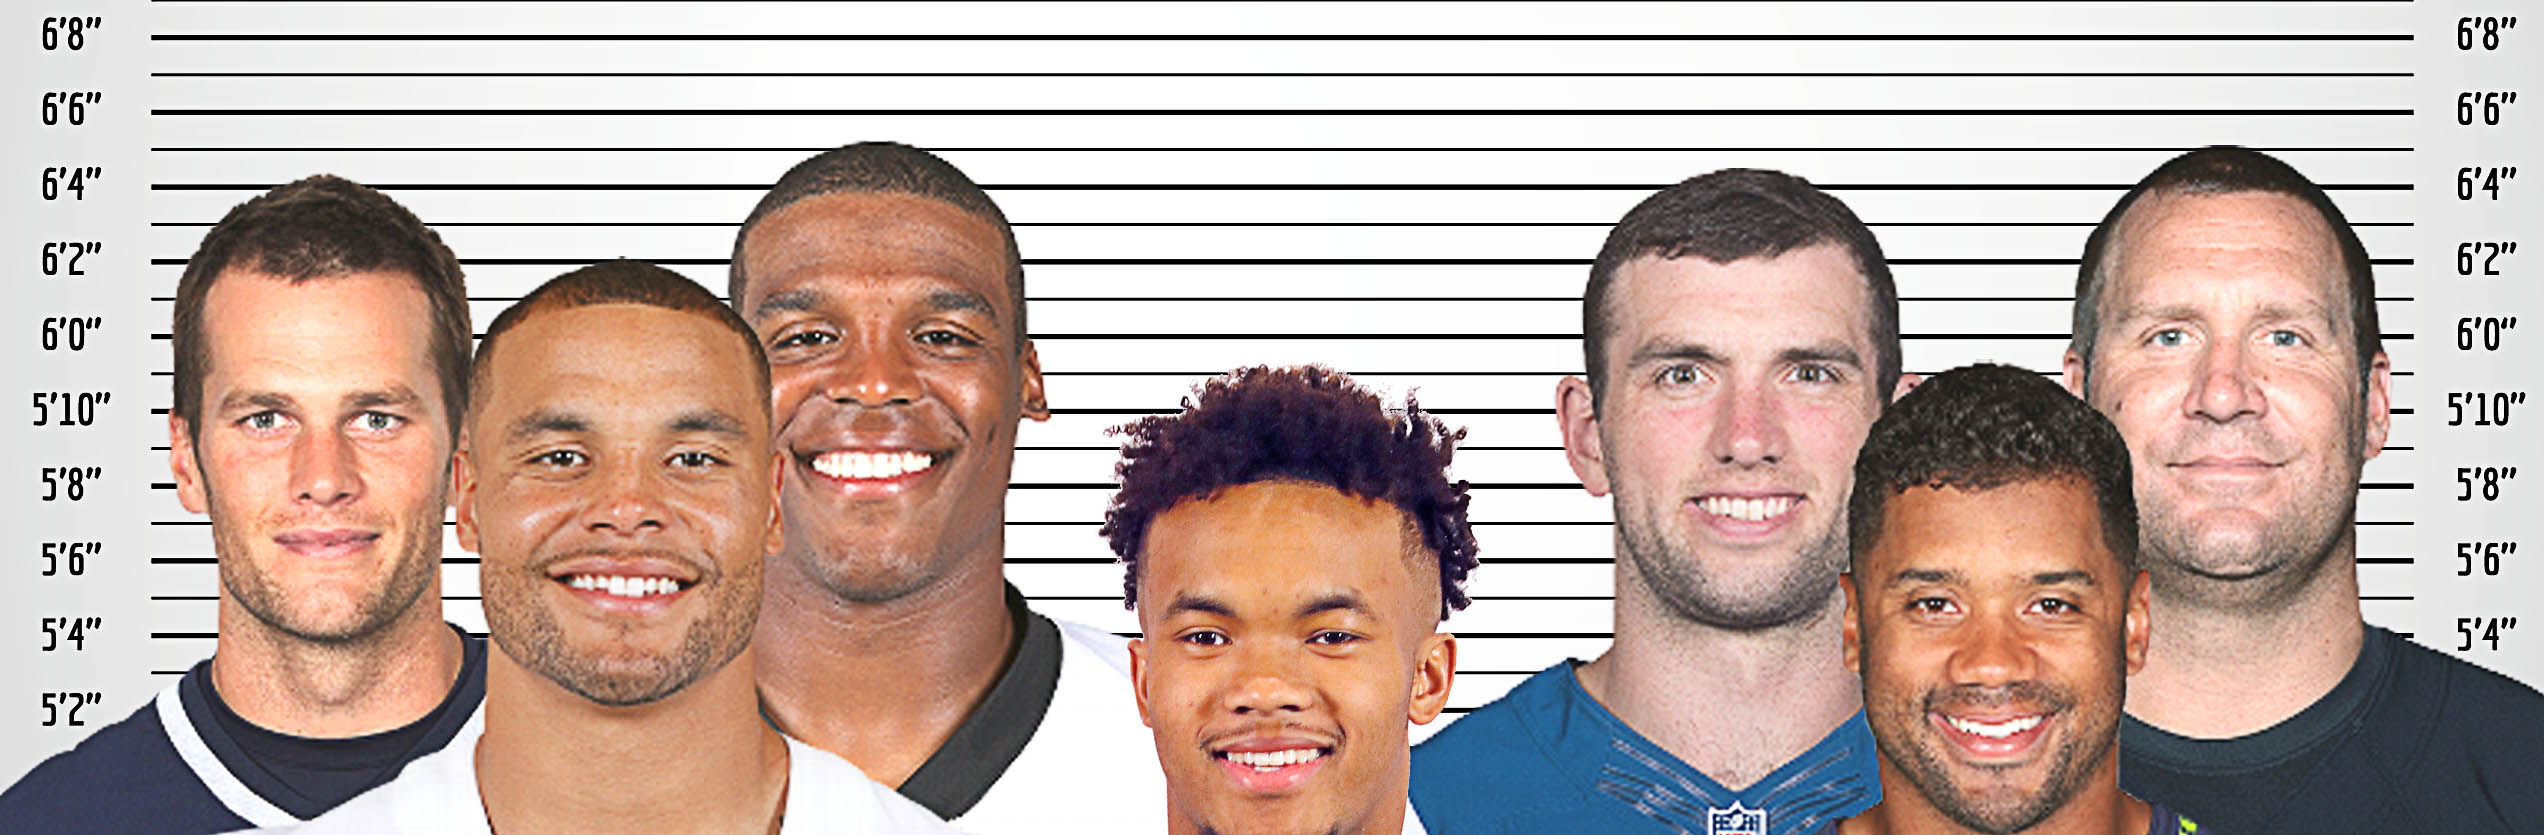 The Tallest NFL Quarterbacks in History ALOHA!